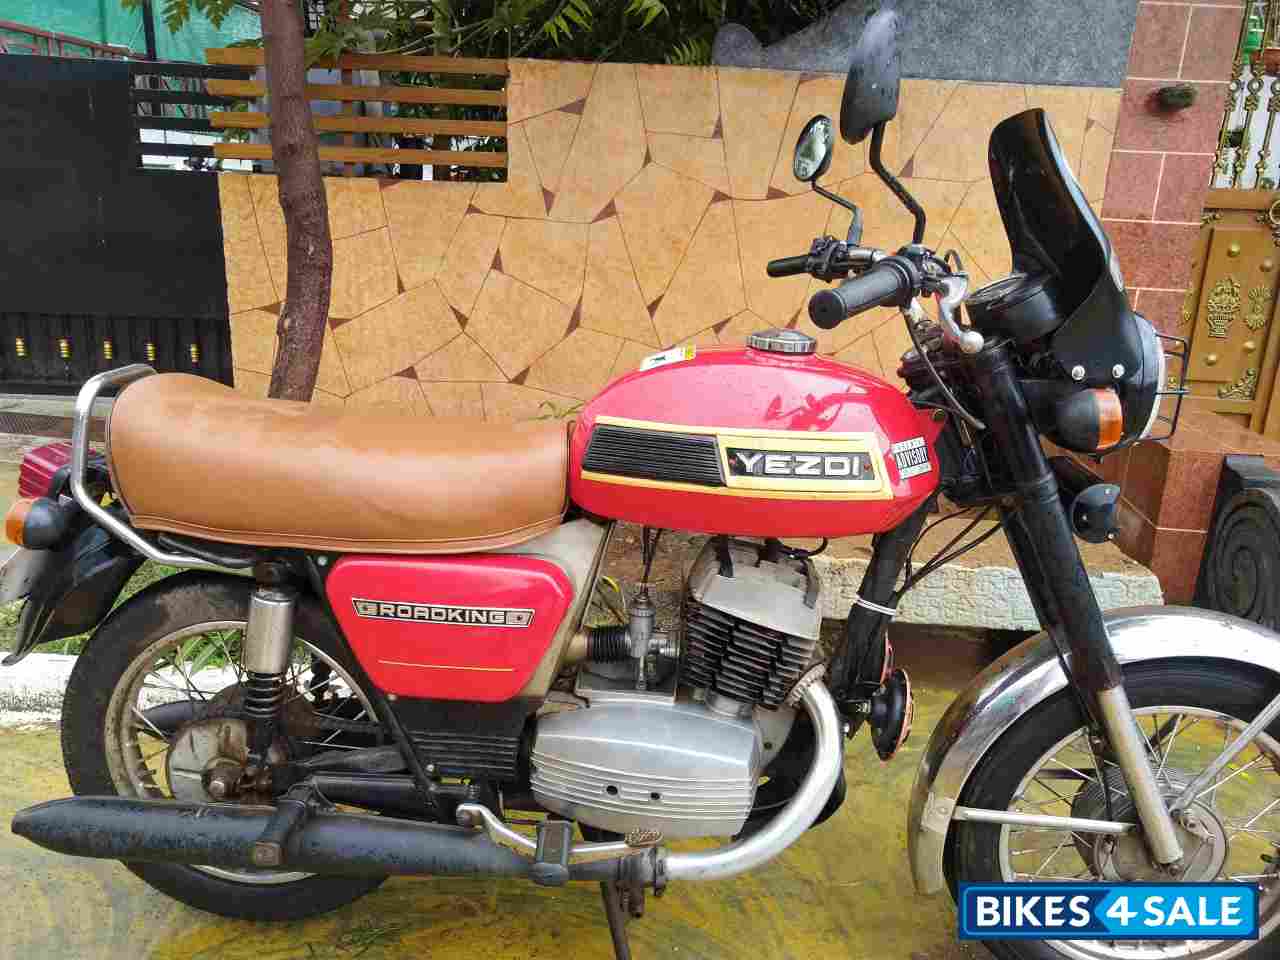 Used 1996 Model Ideal Jawa Yezdi Roadking For Sale In Coimbatore Id Bikes4sale